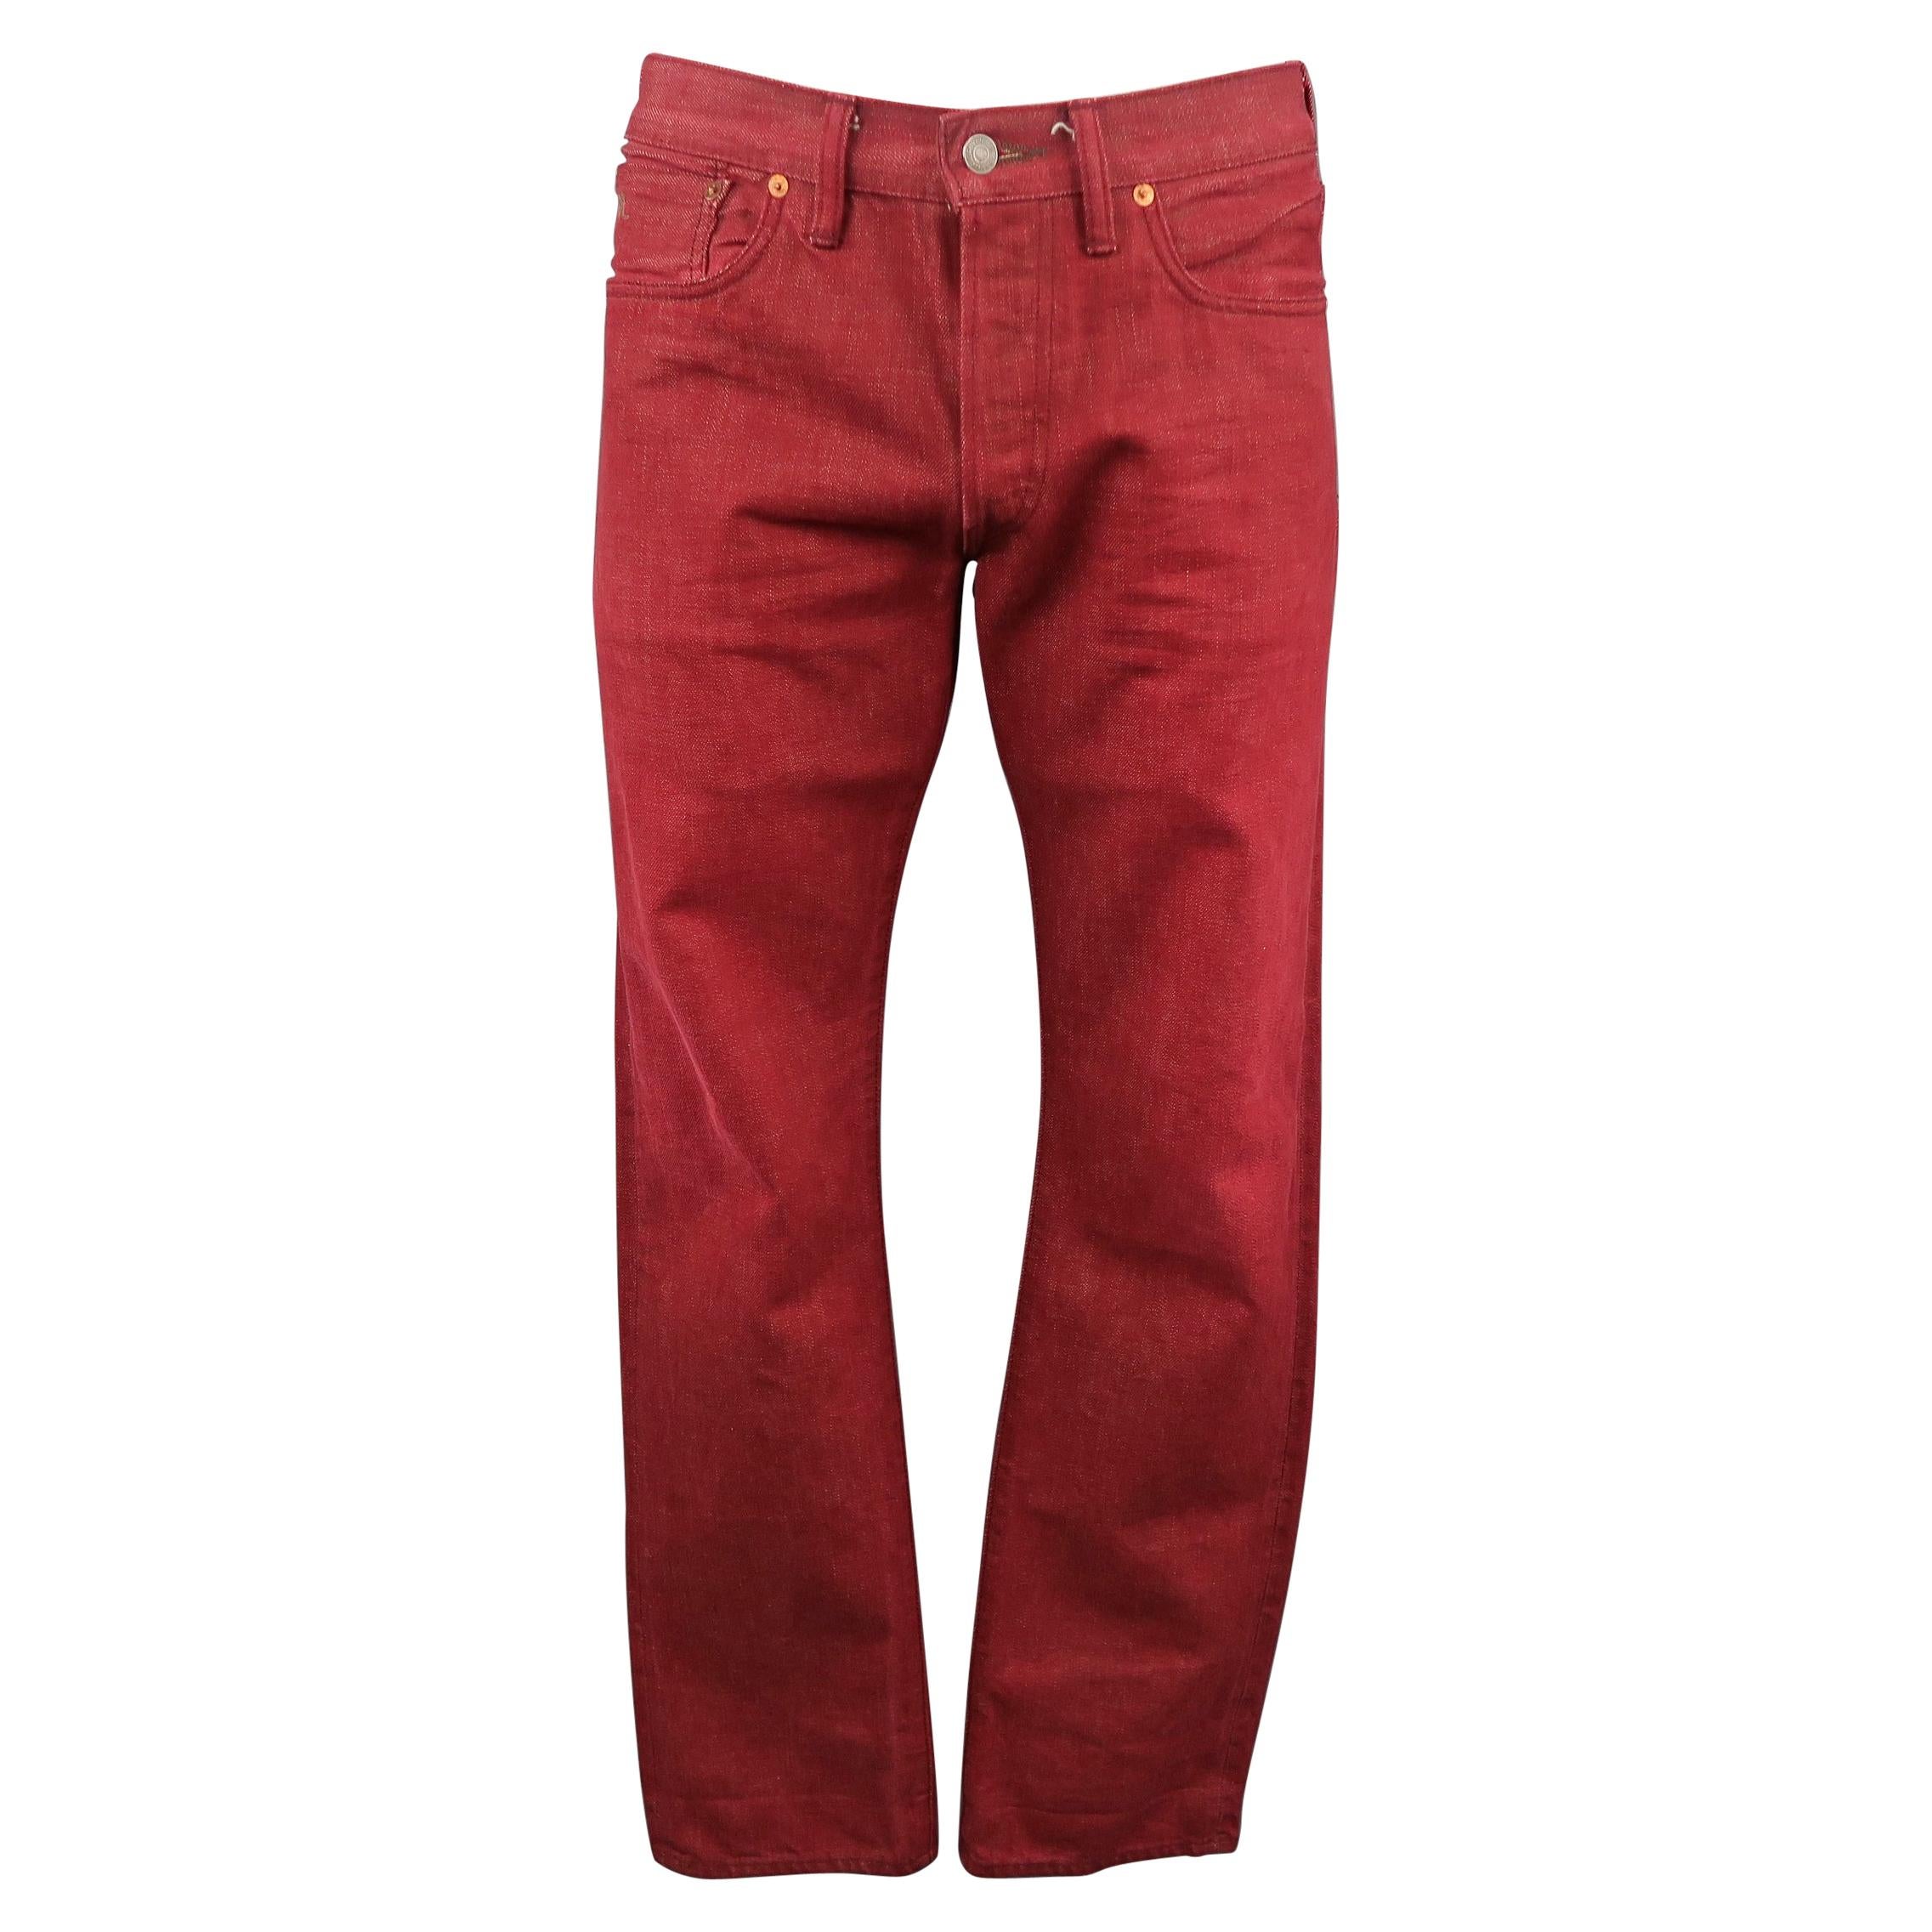 RRL by RALPH LAUREN Size 33 Red Selvedge Denim Jeans